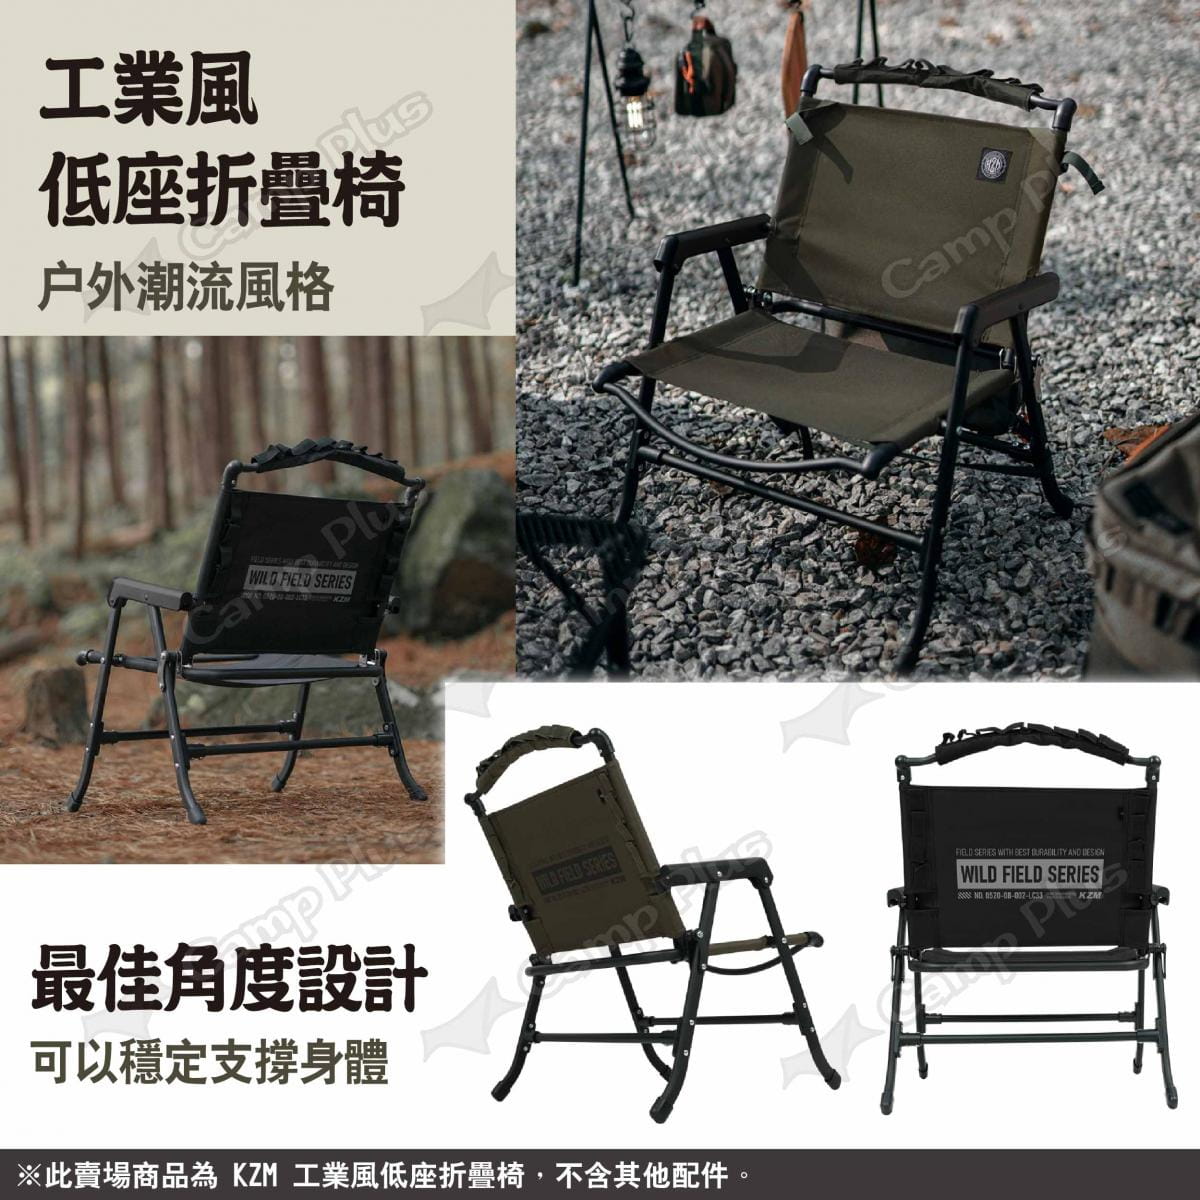 【KZM】工業風低座折疊椅 兩色 K23T1C02KH/BK 悠遊戶外 2